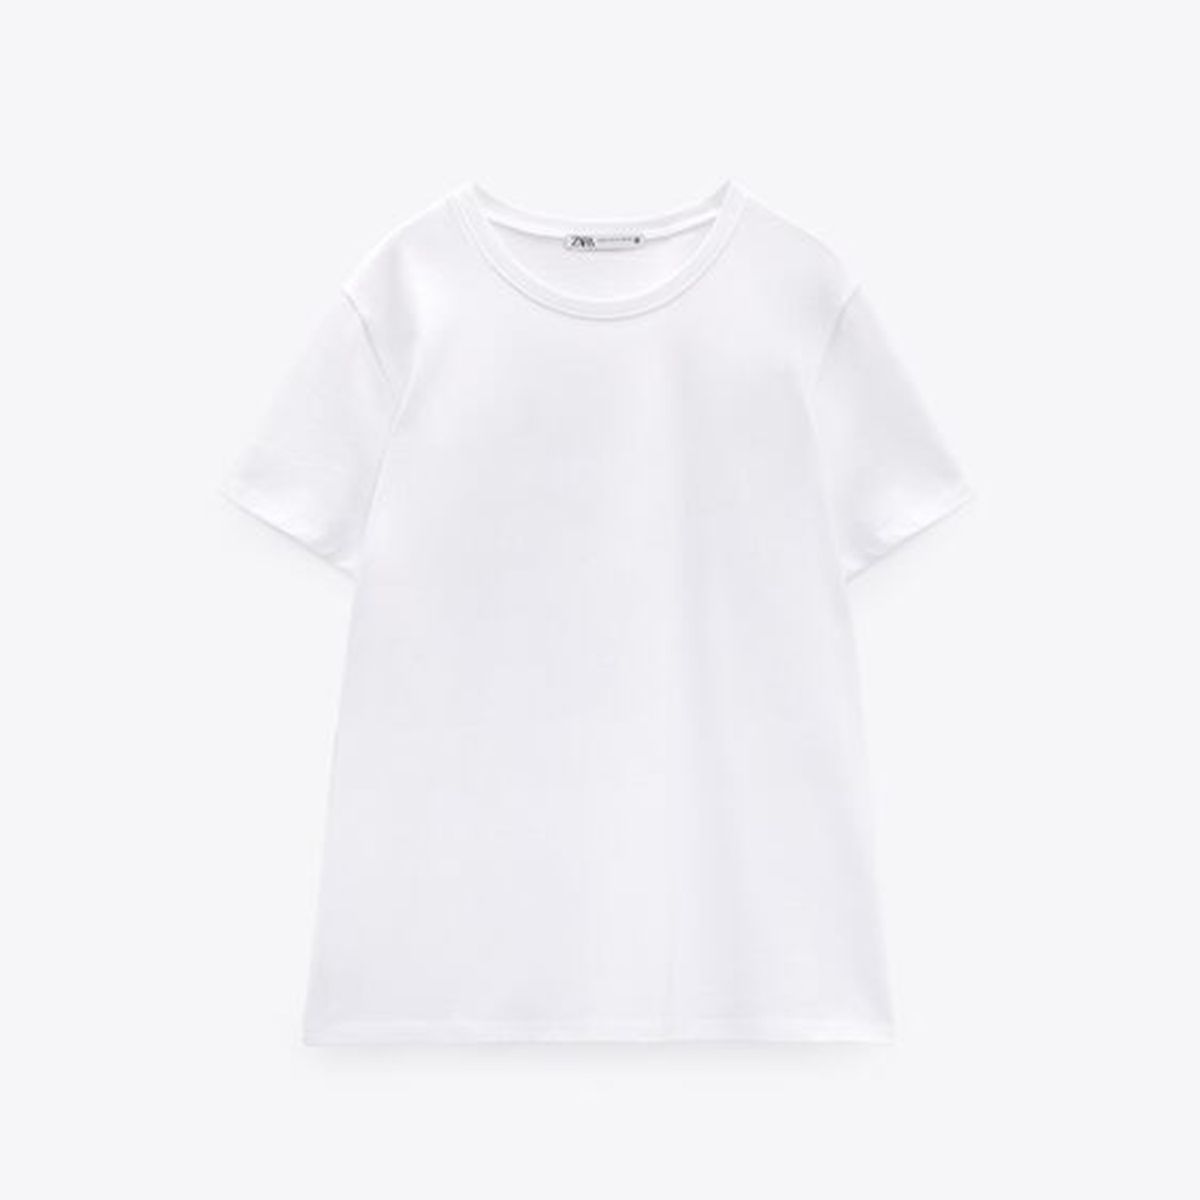 Good American x Zara White T-Shirt